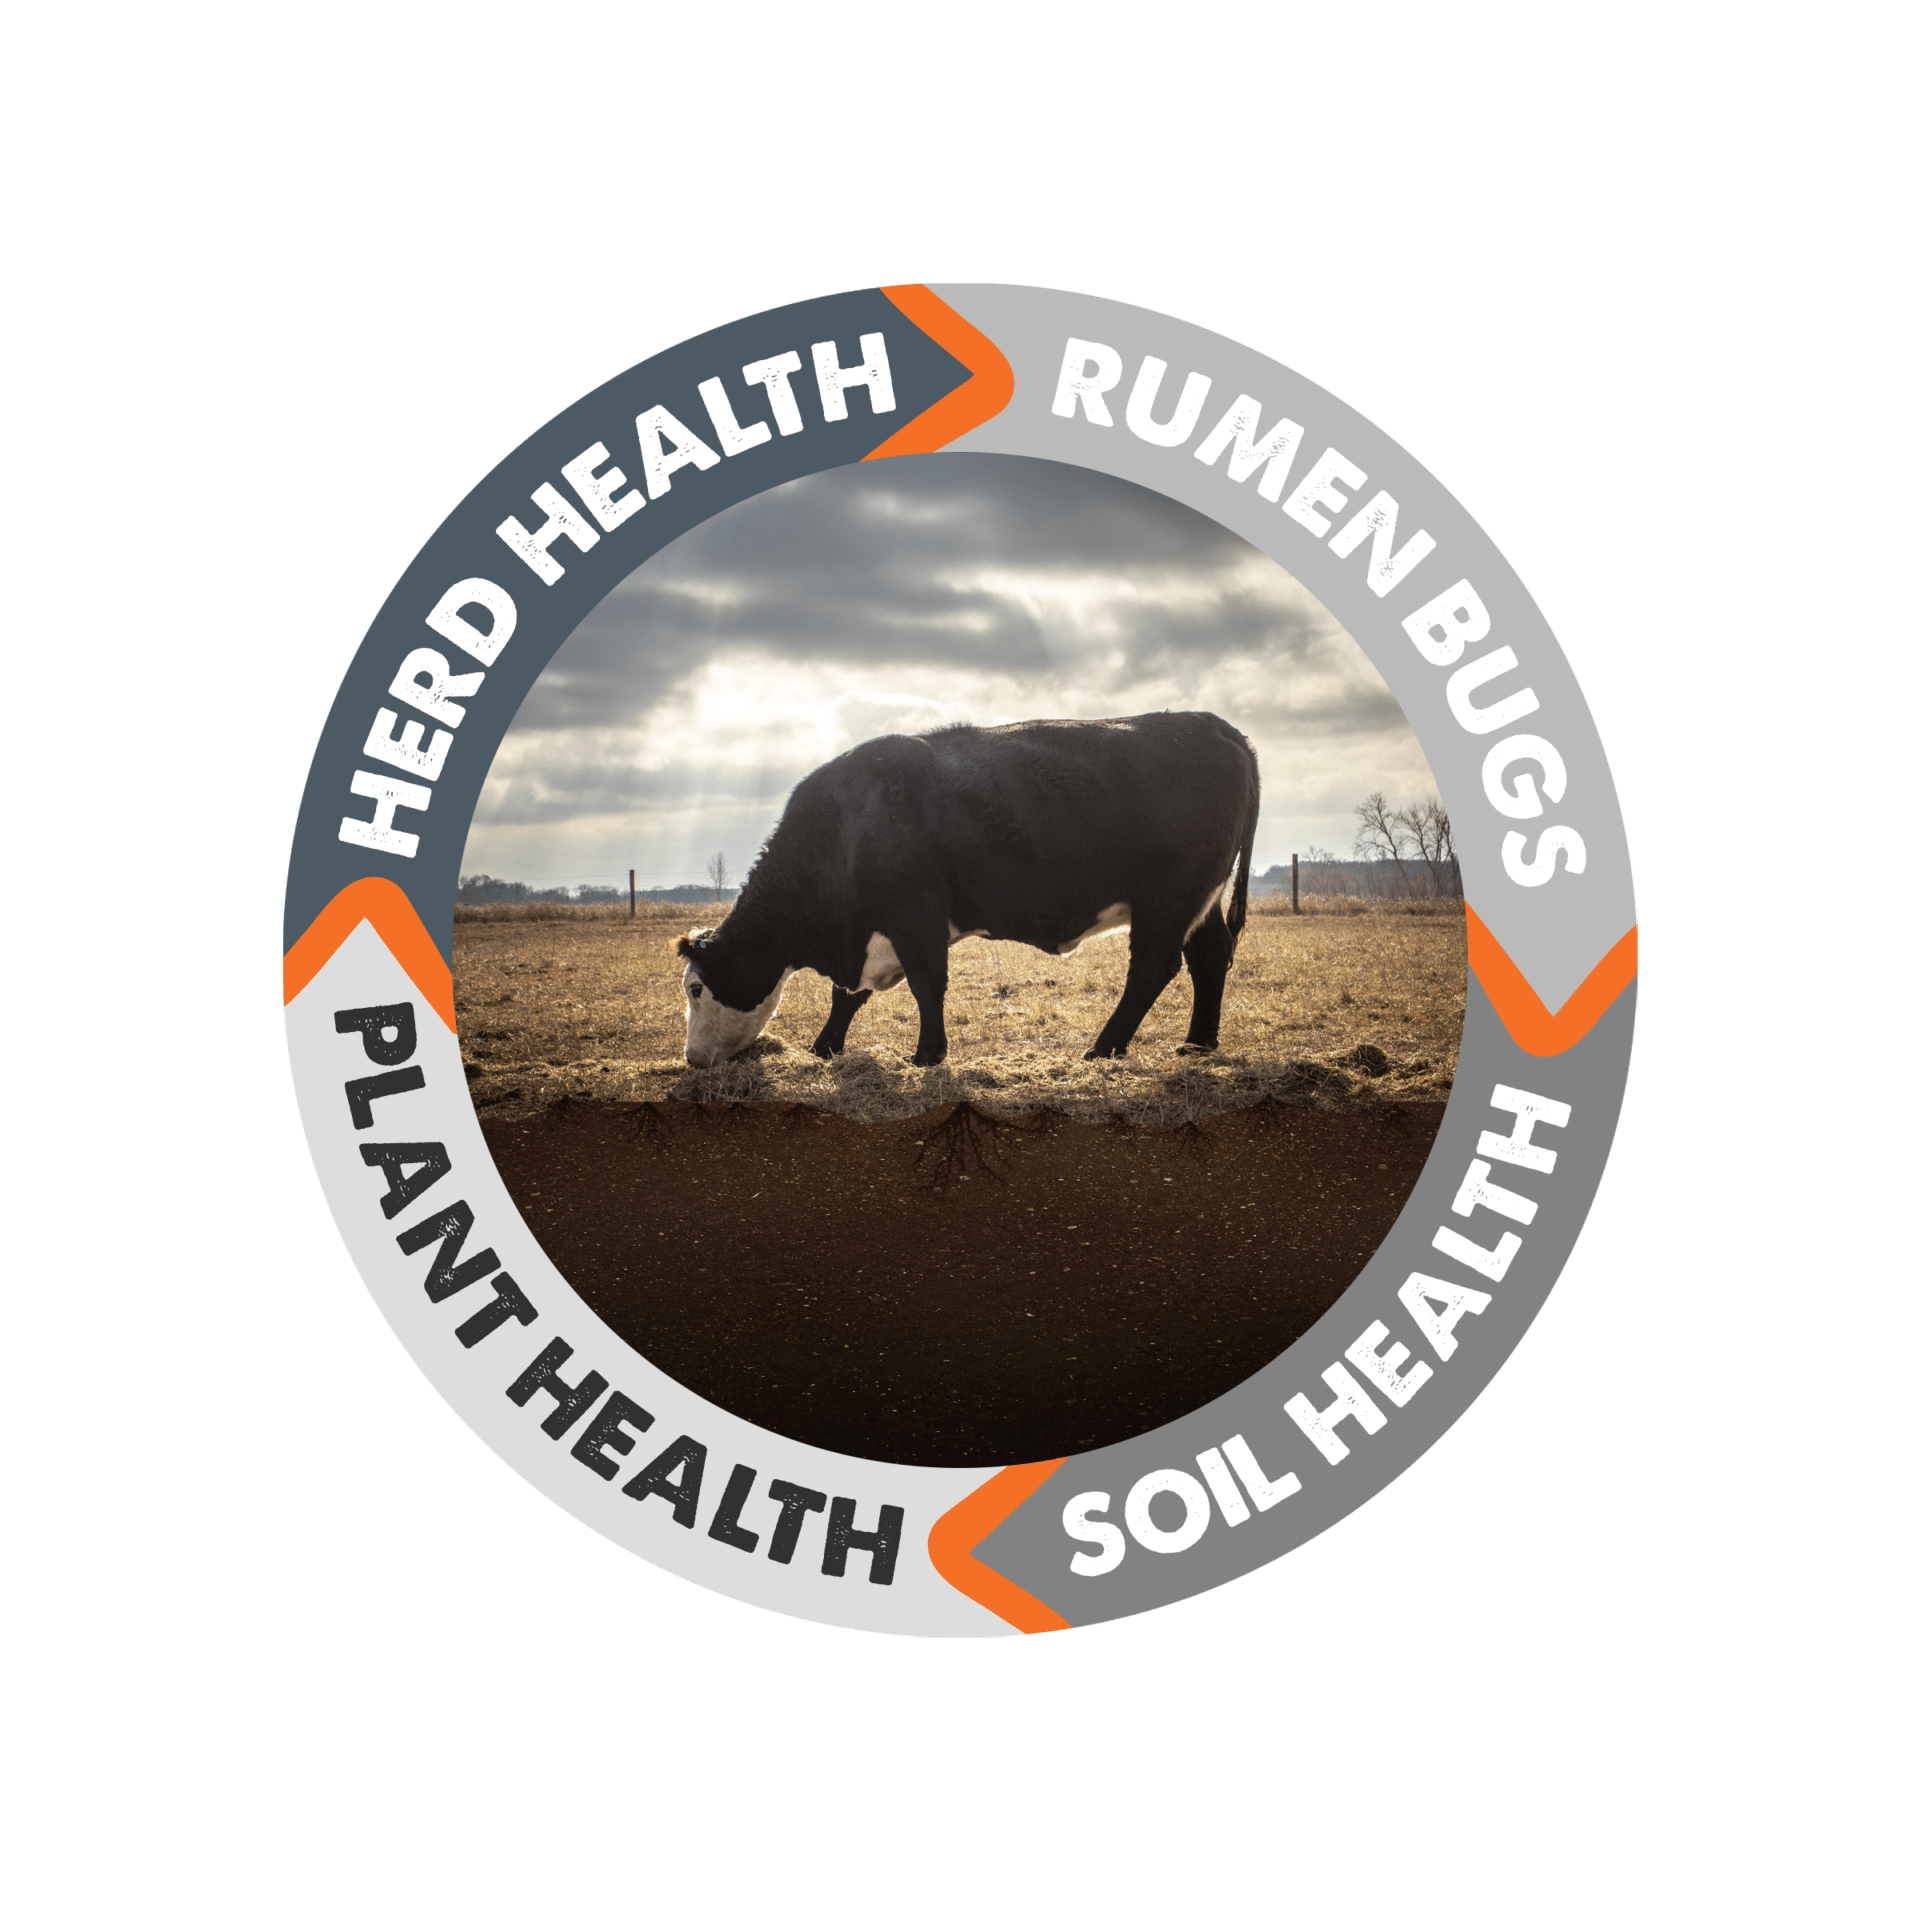 herd health rumen bugs soil health plant health